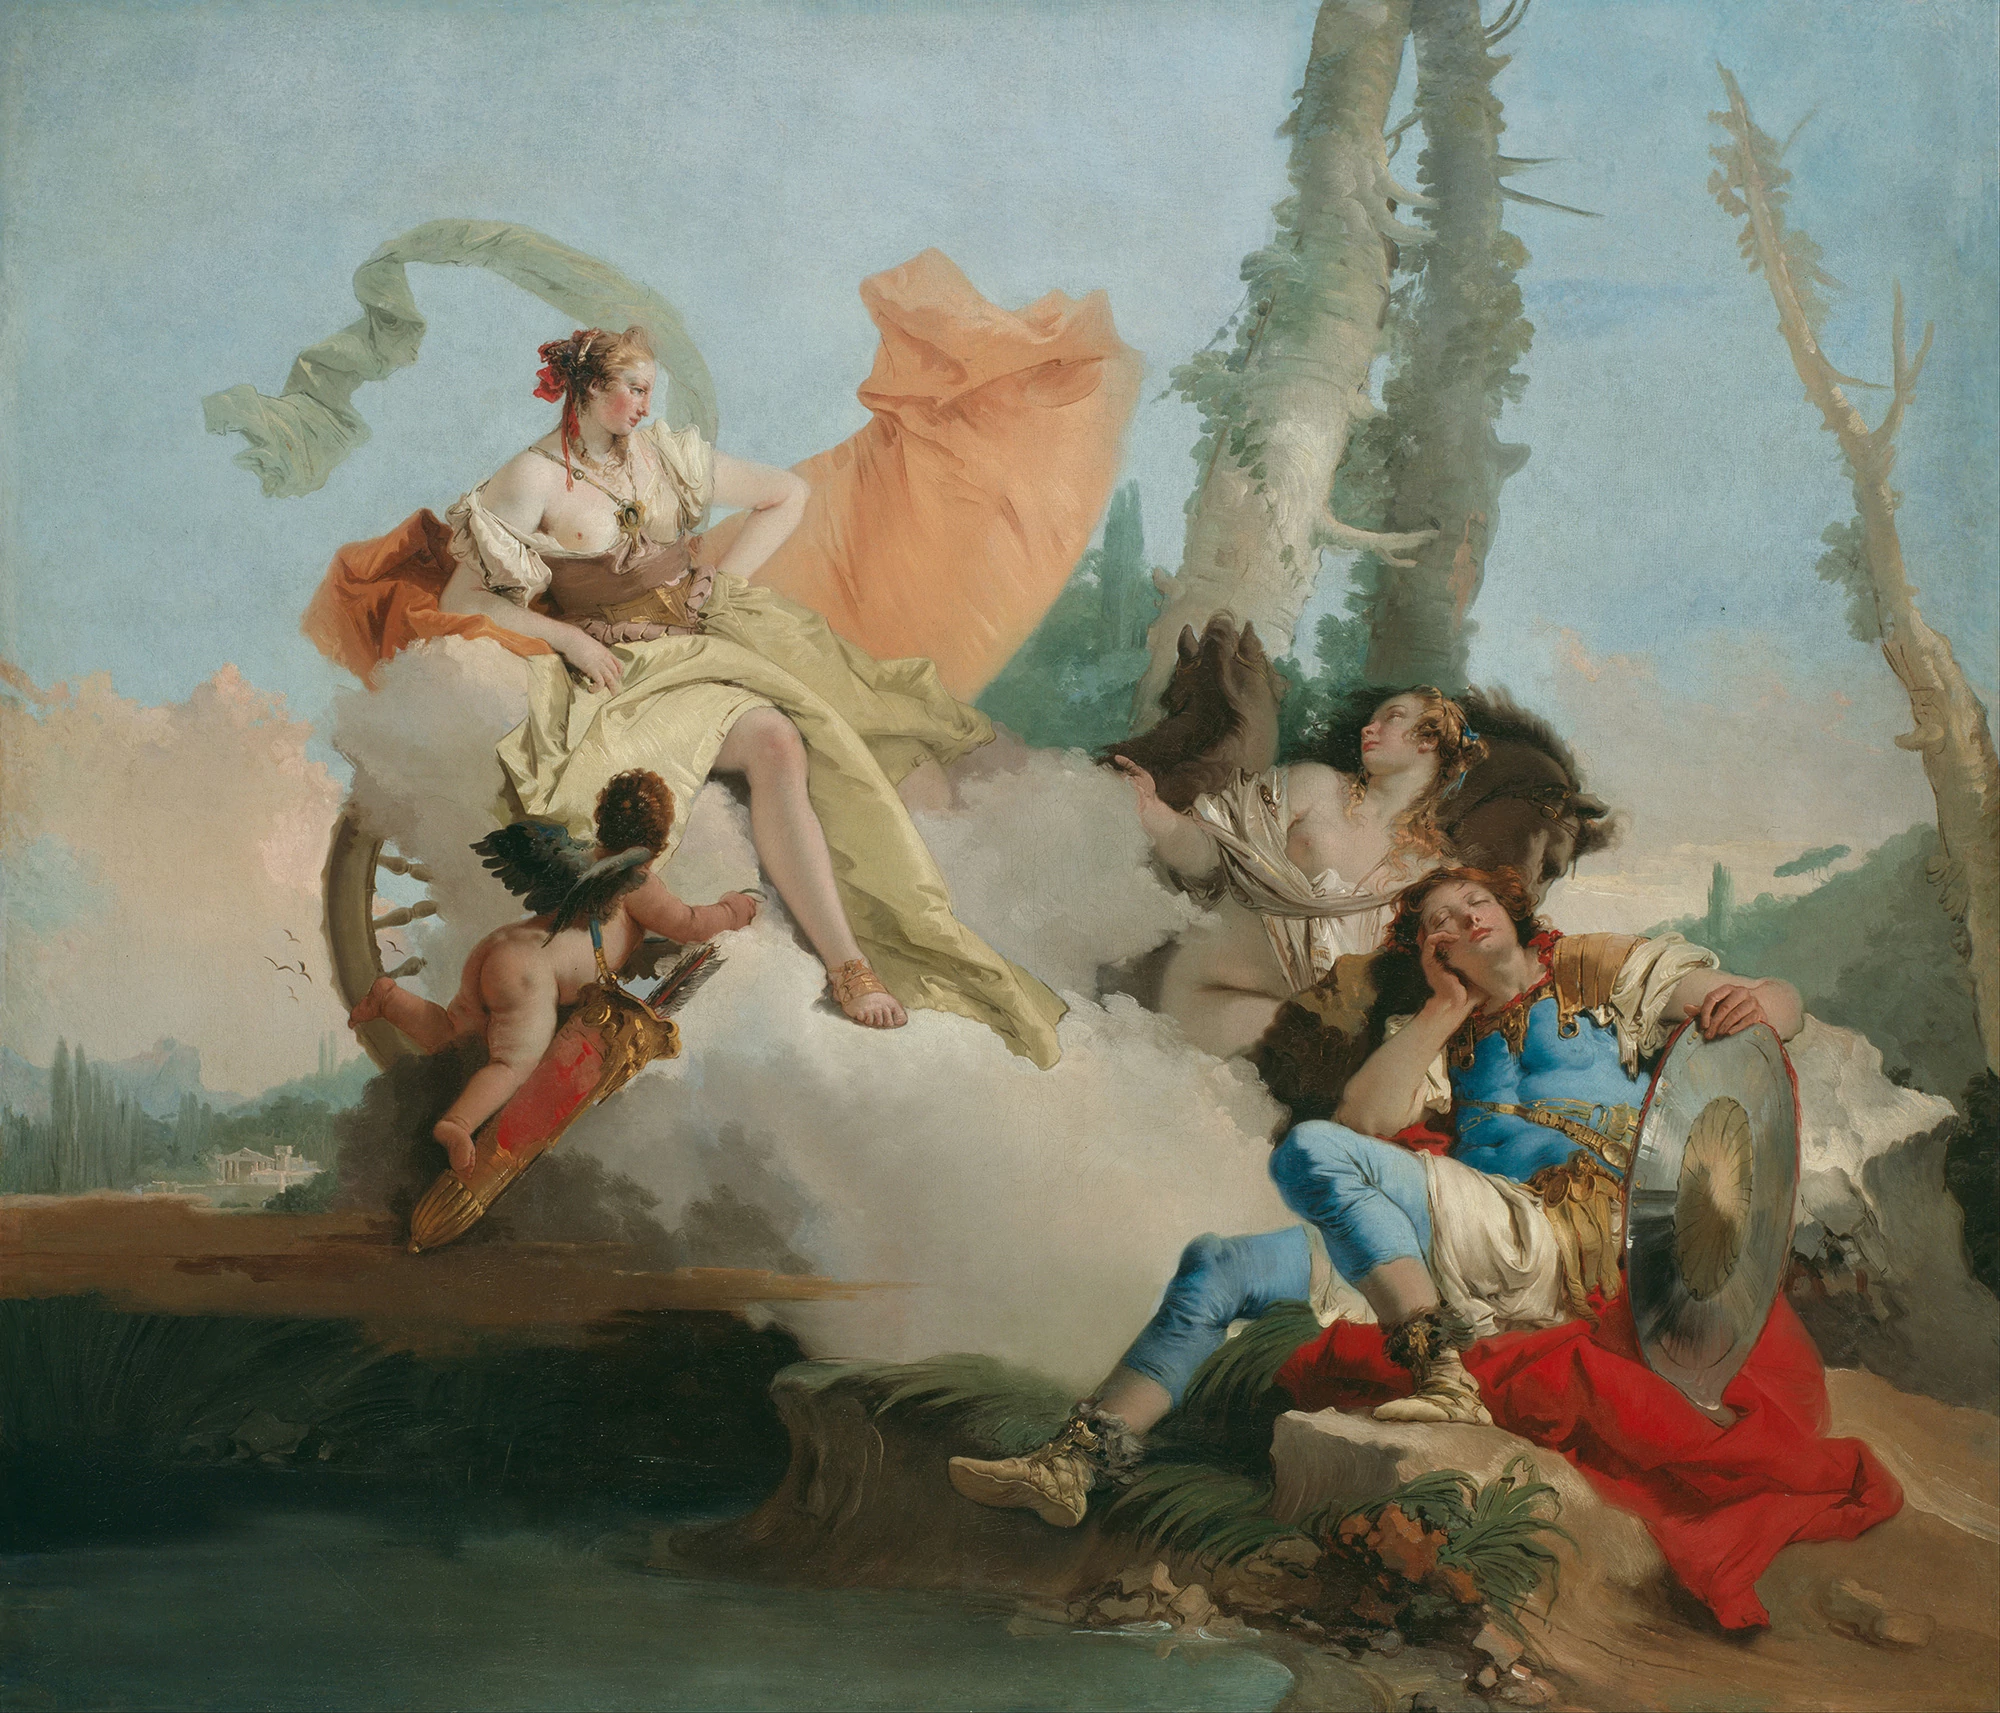 Giovanni Battista Tiepolo, The Artists